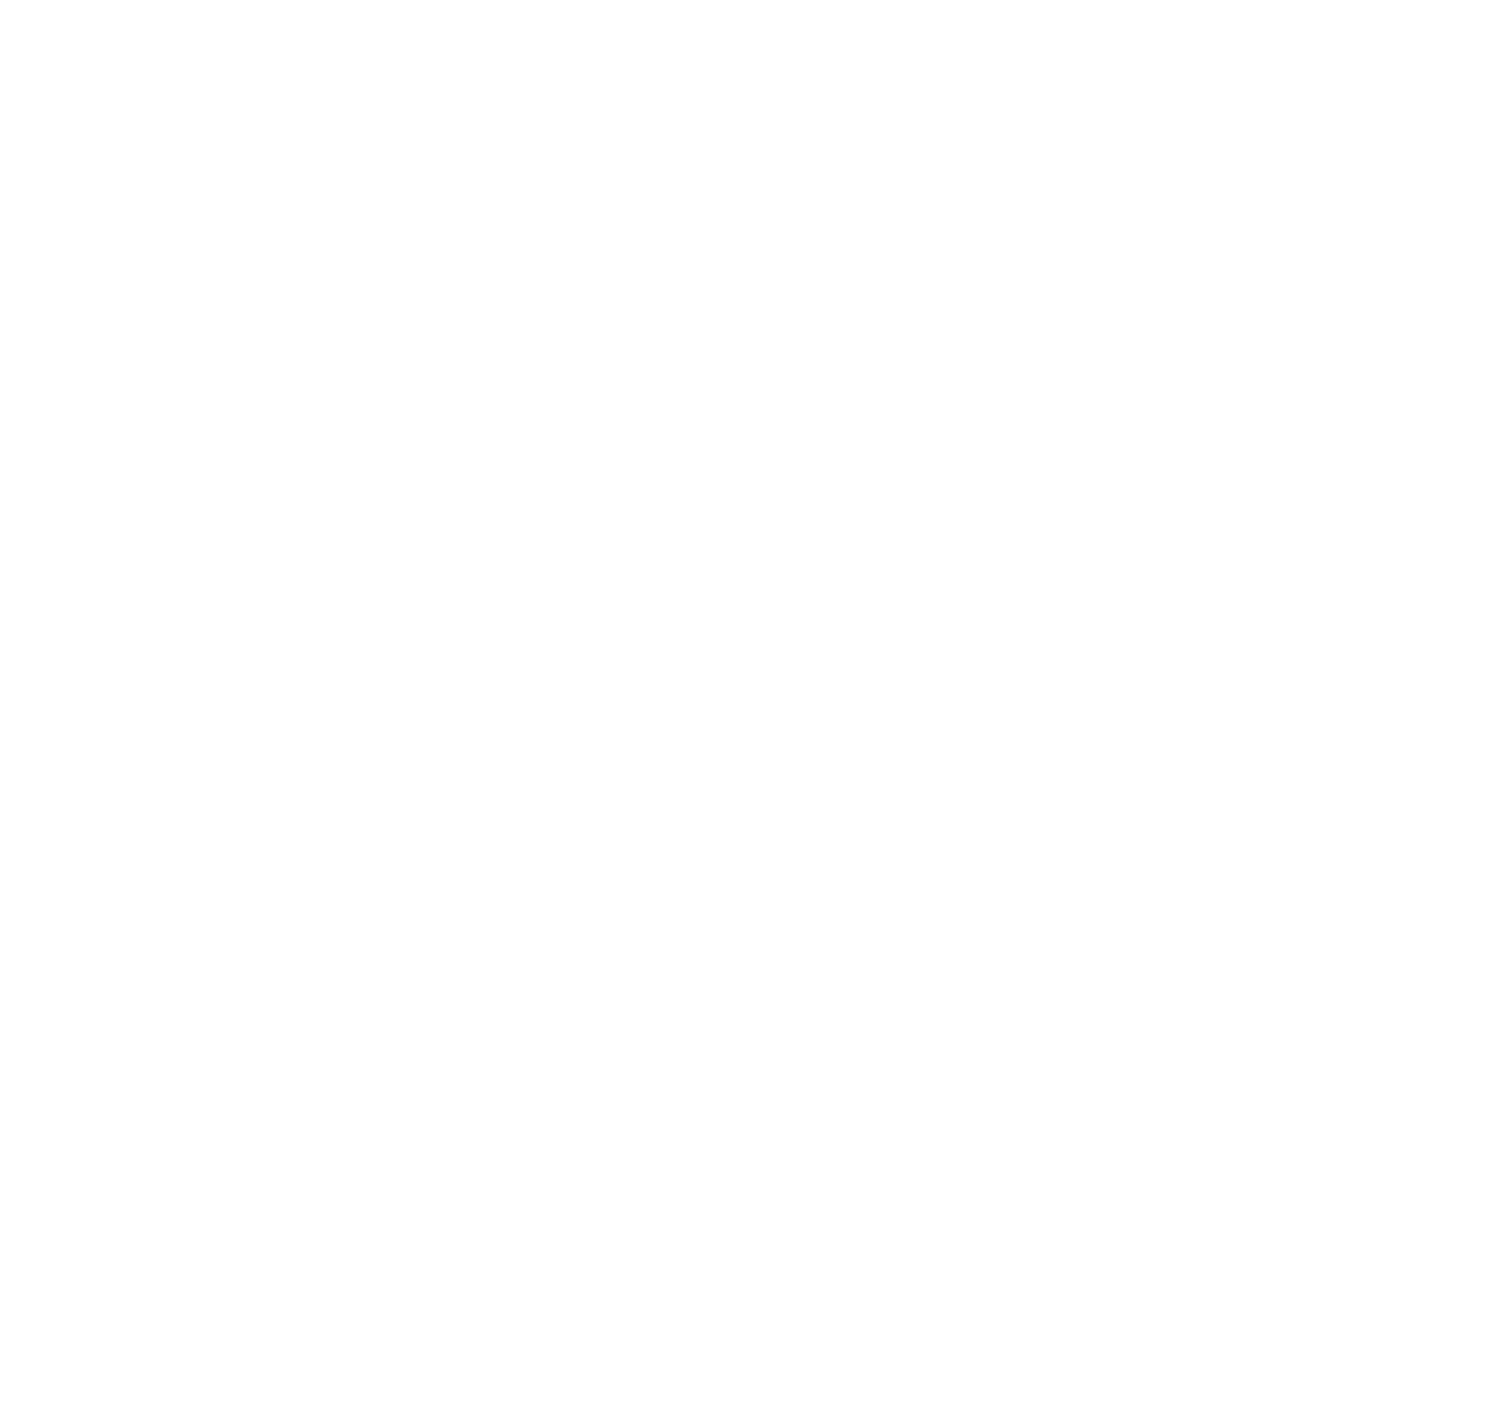 Team Best Life logo